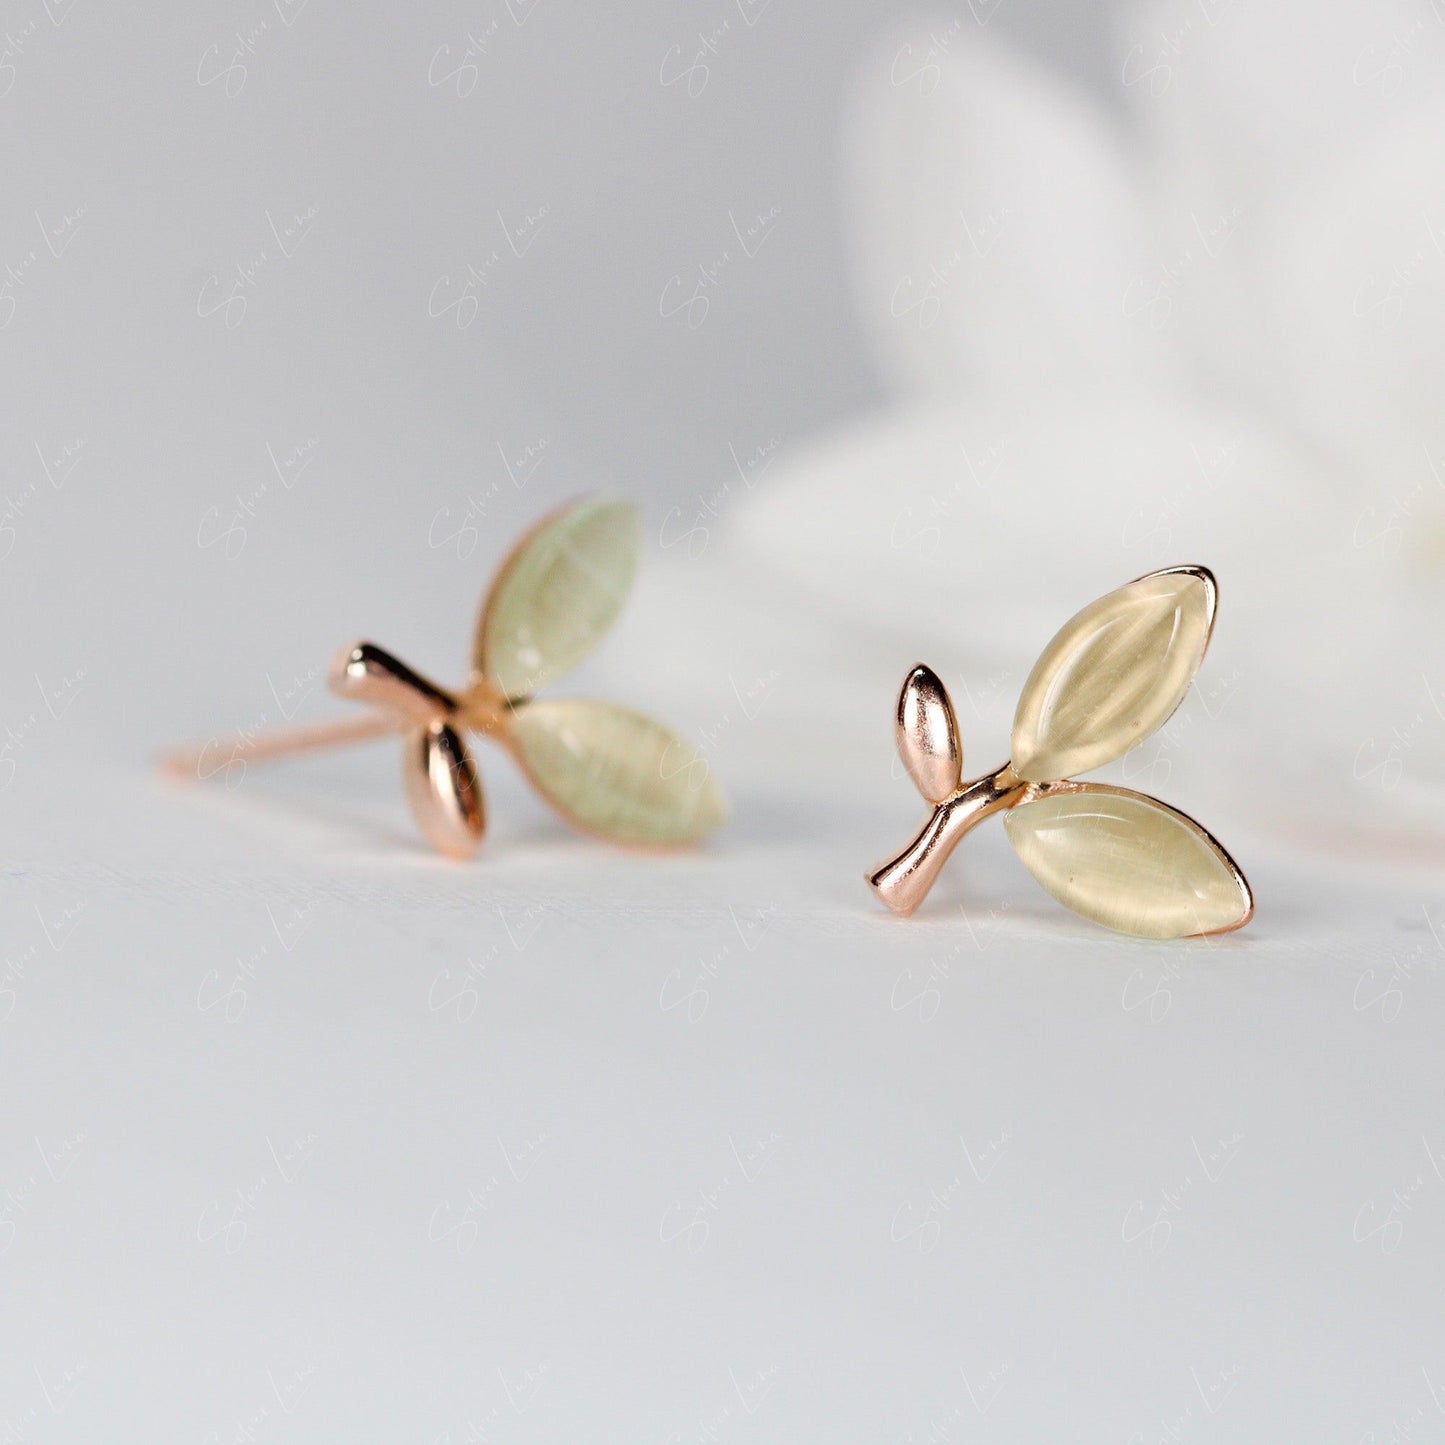 Olive branch leaf stud earrings